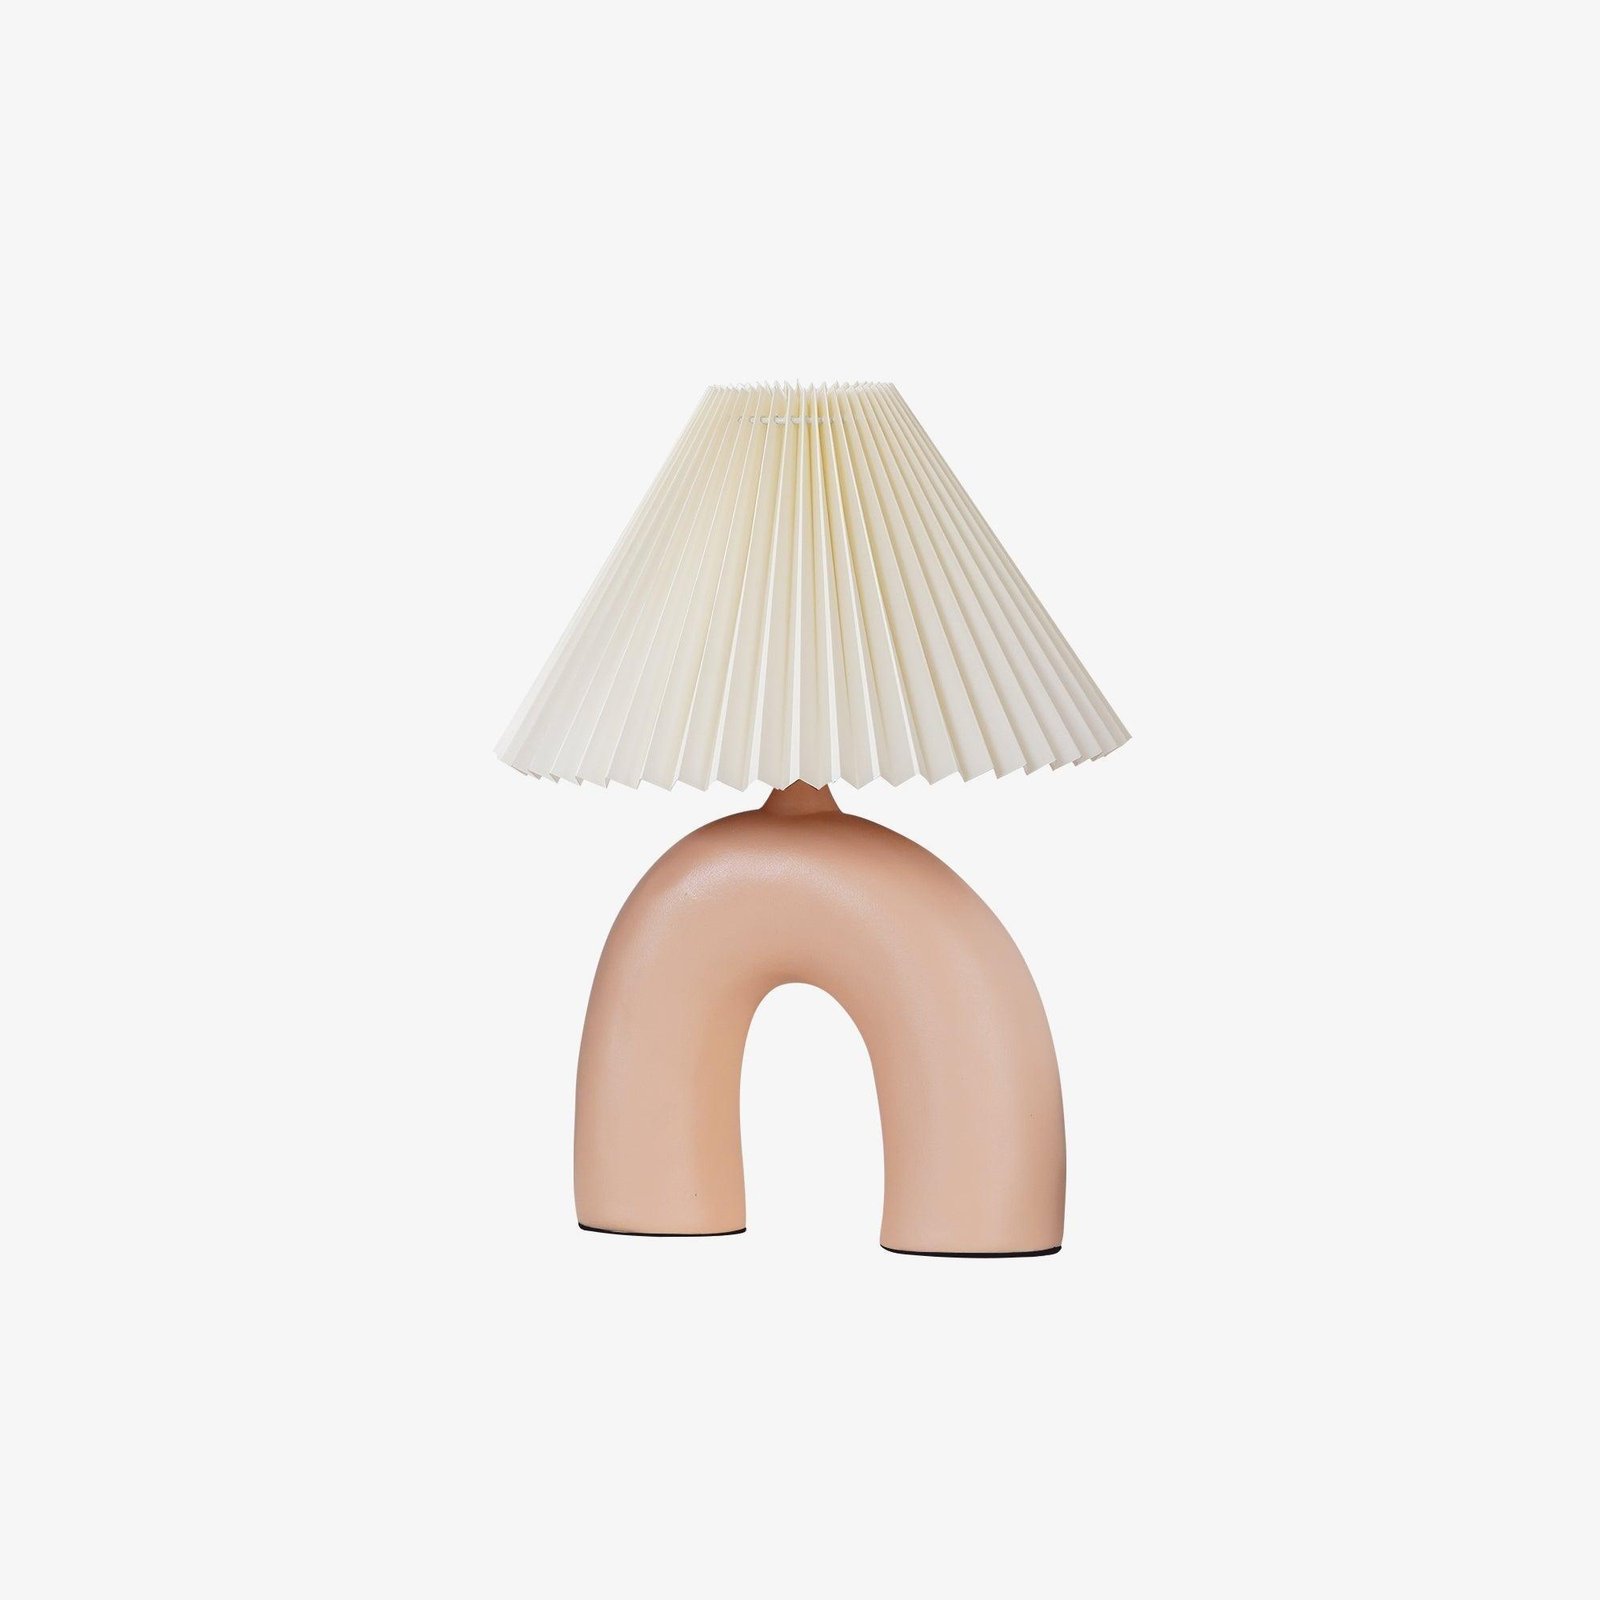 Arched Pleated Design Table Lamp, Skin Color, 11.8″ Diameter x 16.5″ Height (30cm Dia x 42cm H), EU Plug